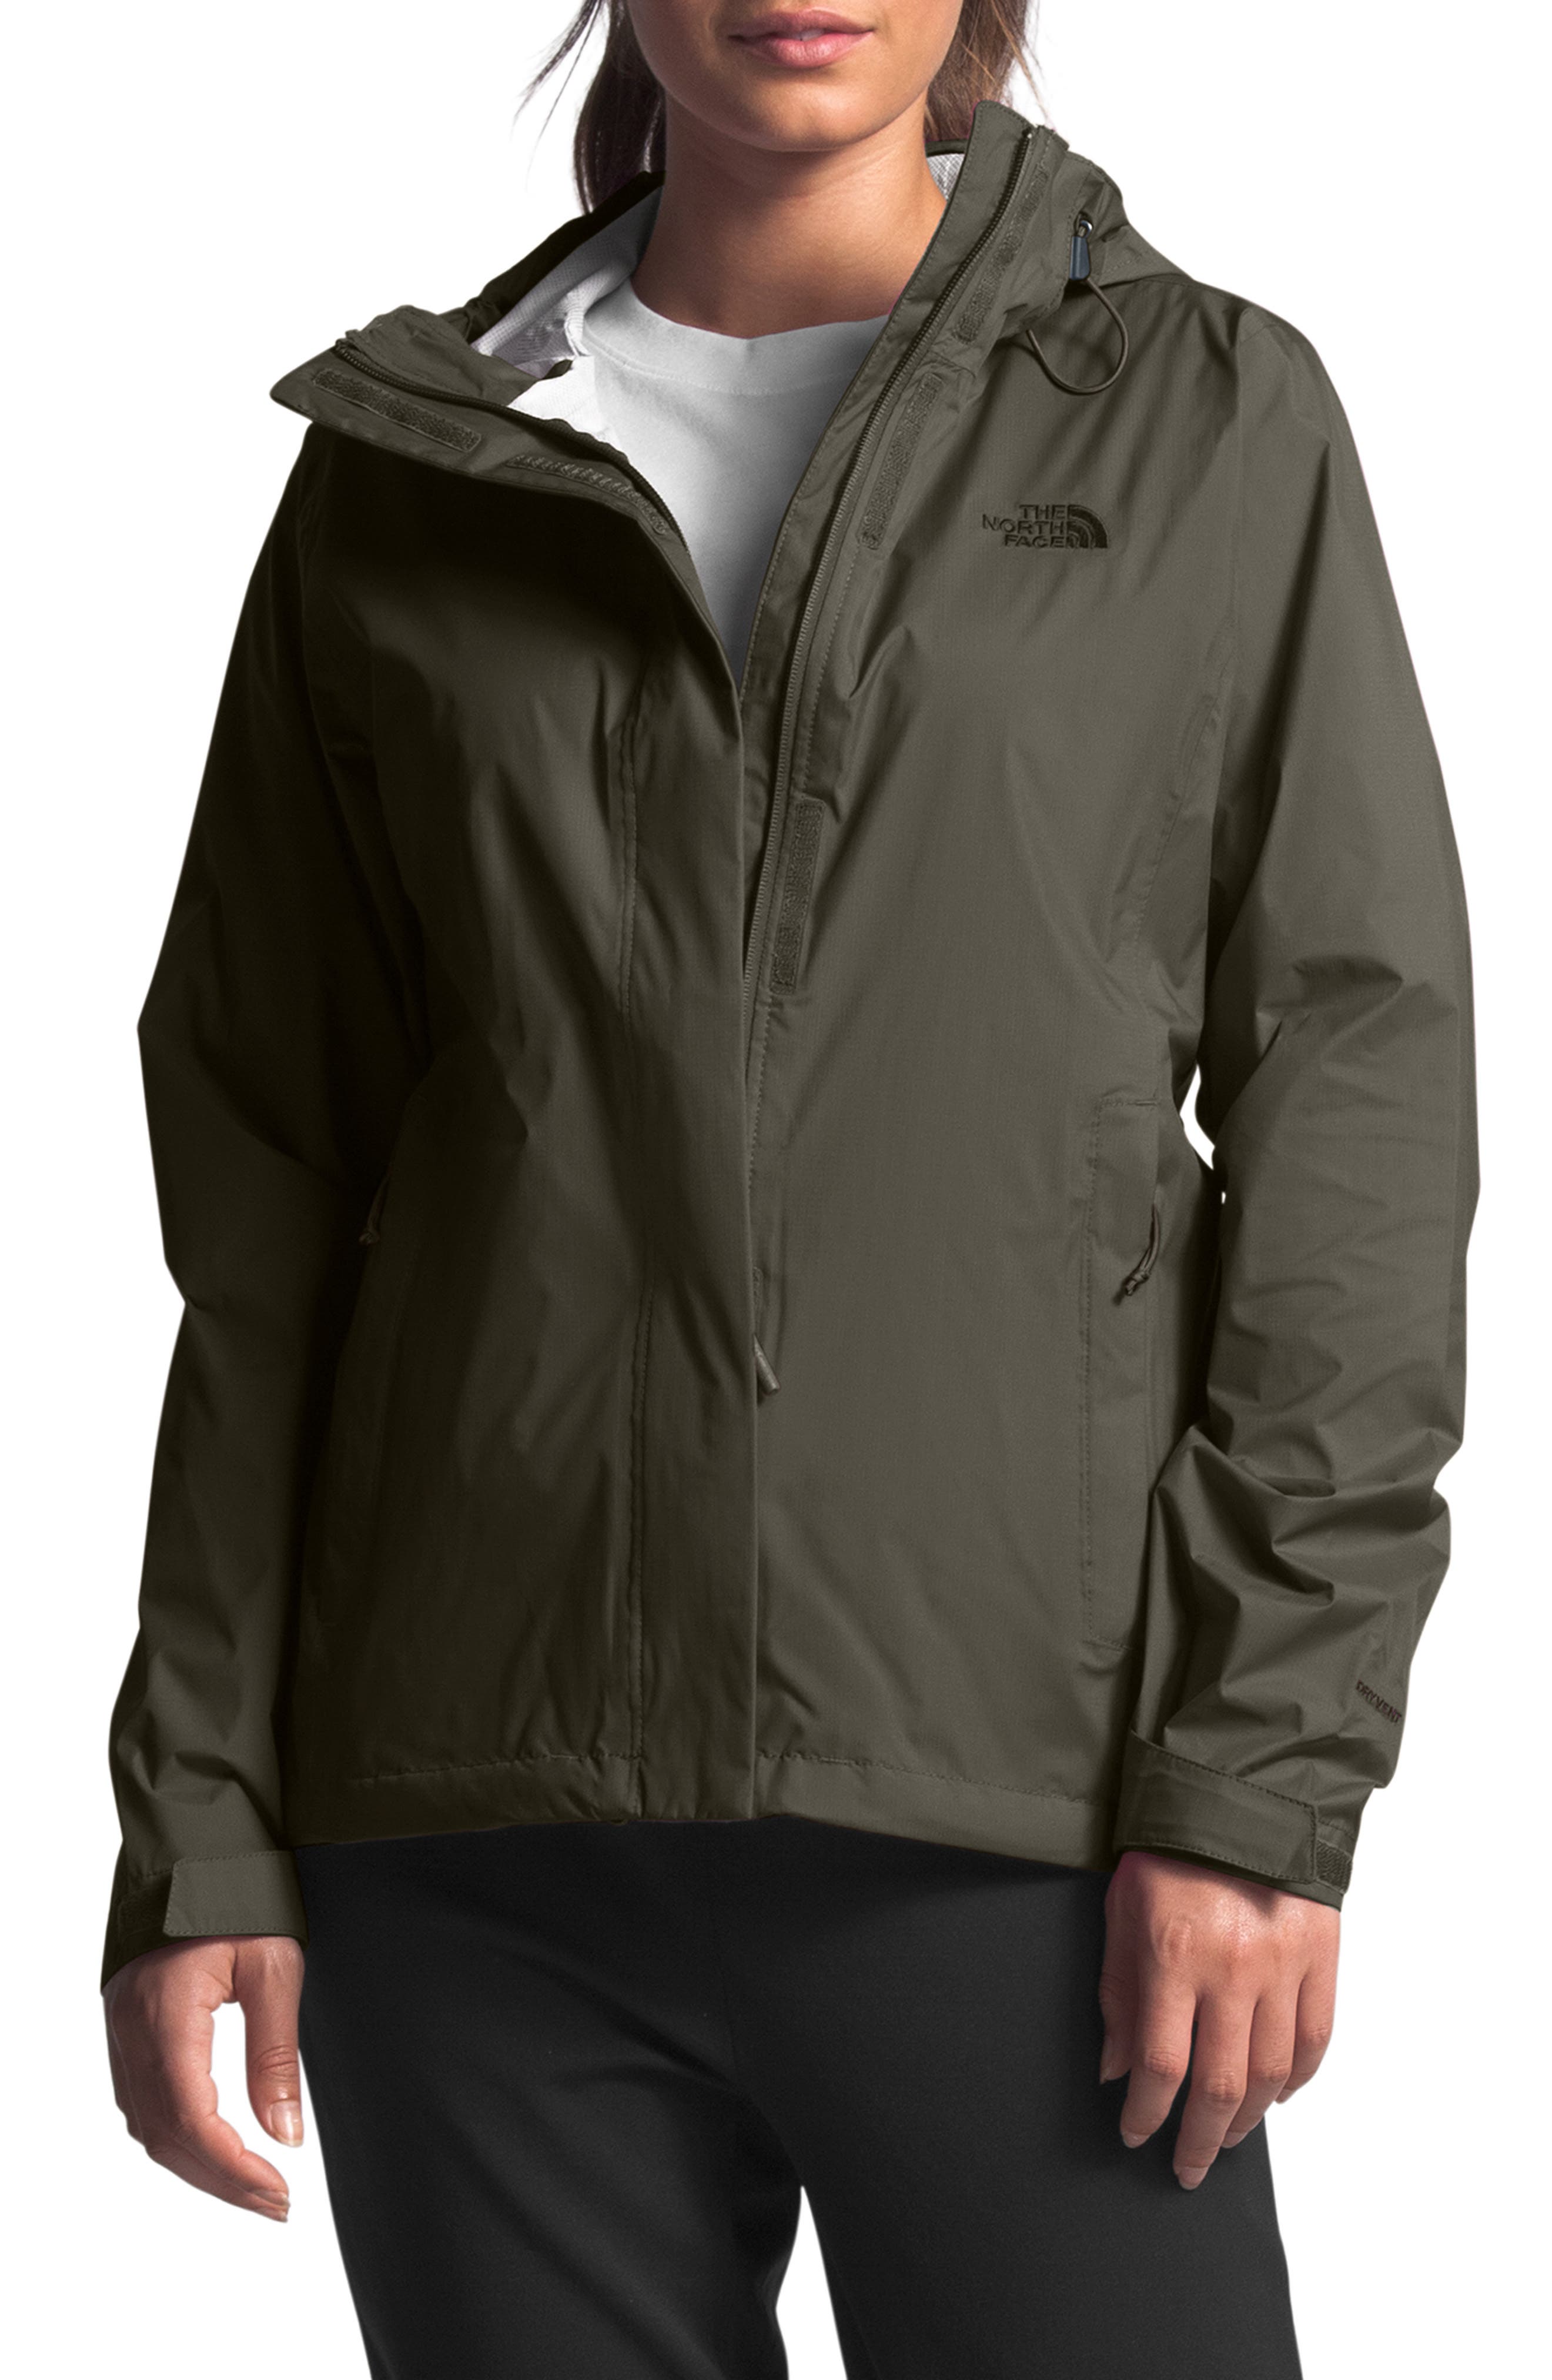 north face packable waterproof jacket